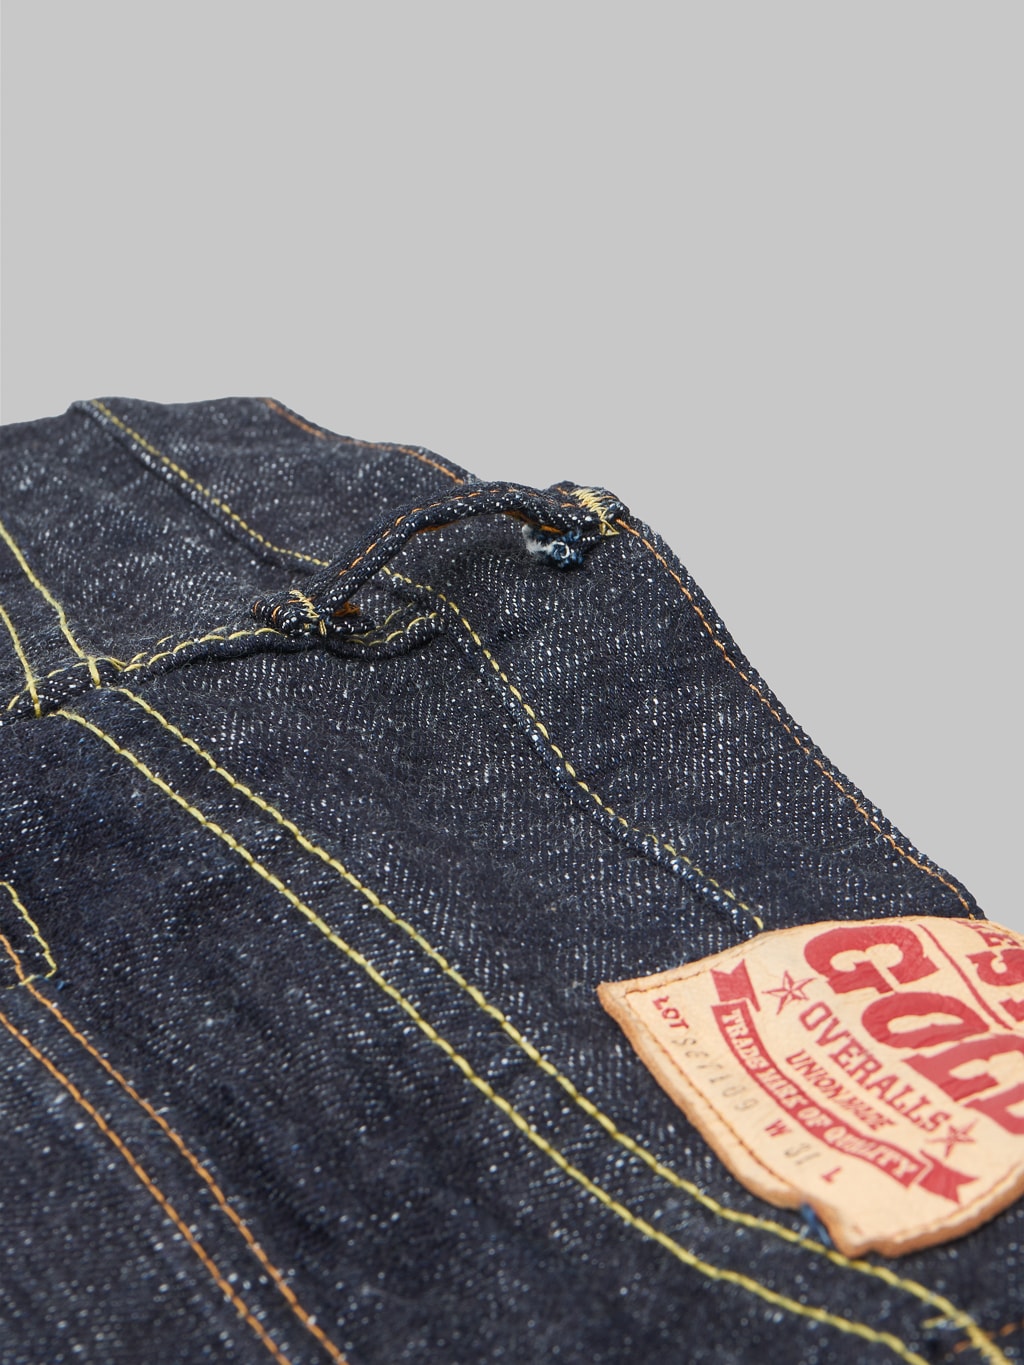 The Strike Gold 7109 Ultra Slubby Slim Tapered Jeans belt loop